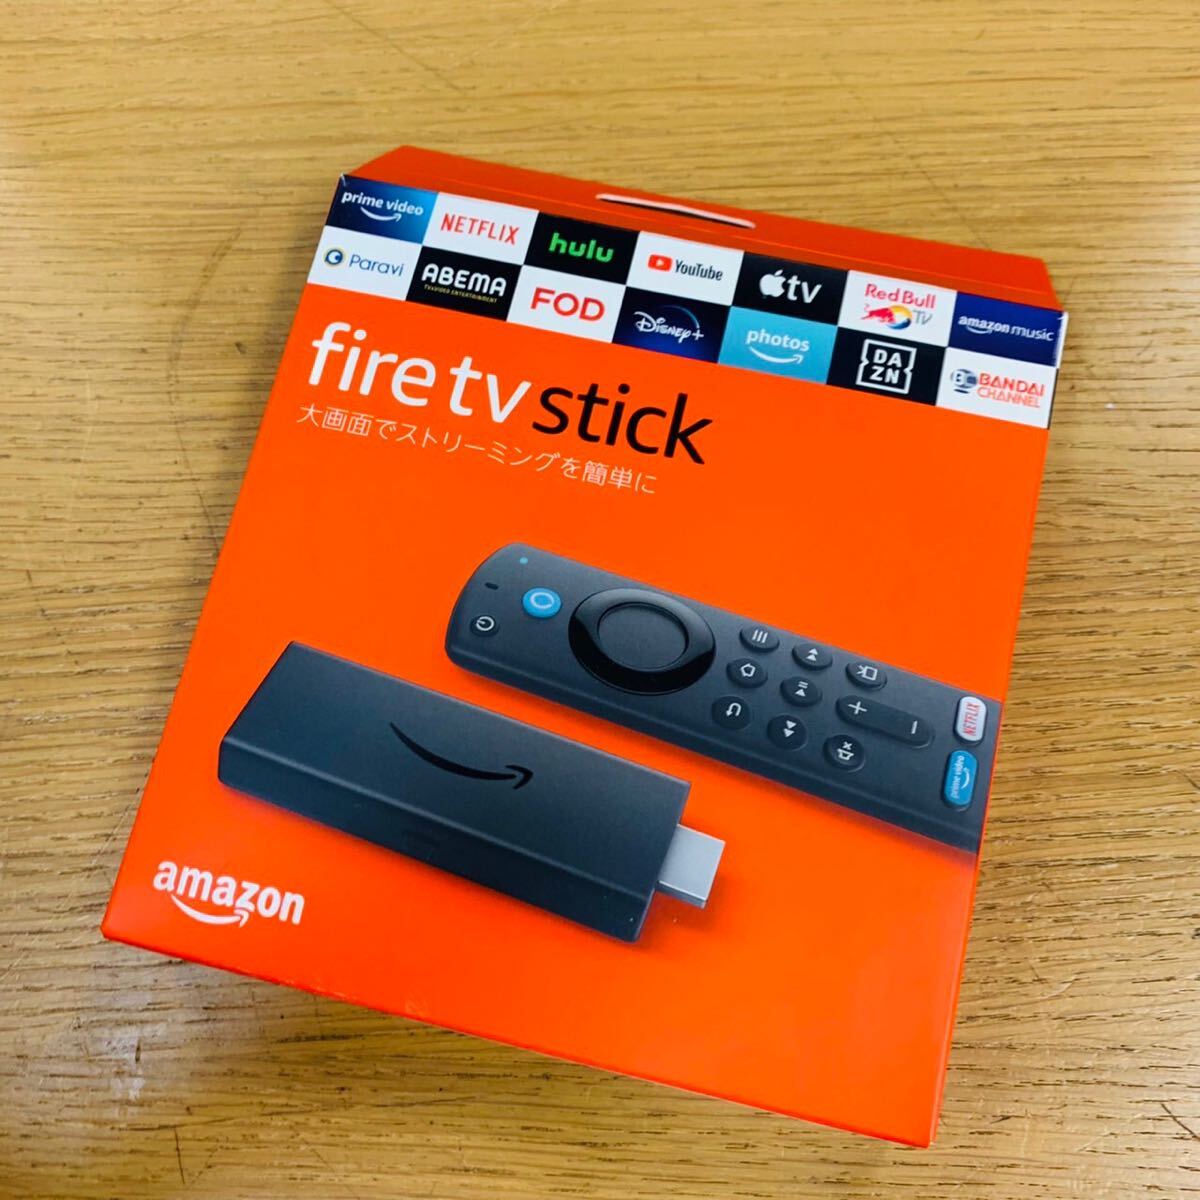 Amazon アマゾン Fire TV Stick ファイヤースティック S3L46N 第3世代 Alexa アレクサ 対応リモコン 付 P4C6EN 動作未確認 NN629_画像1